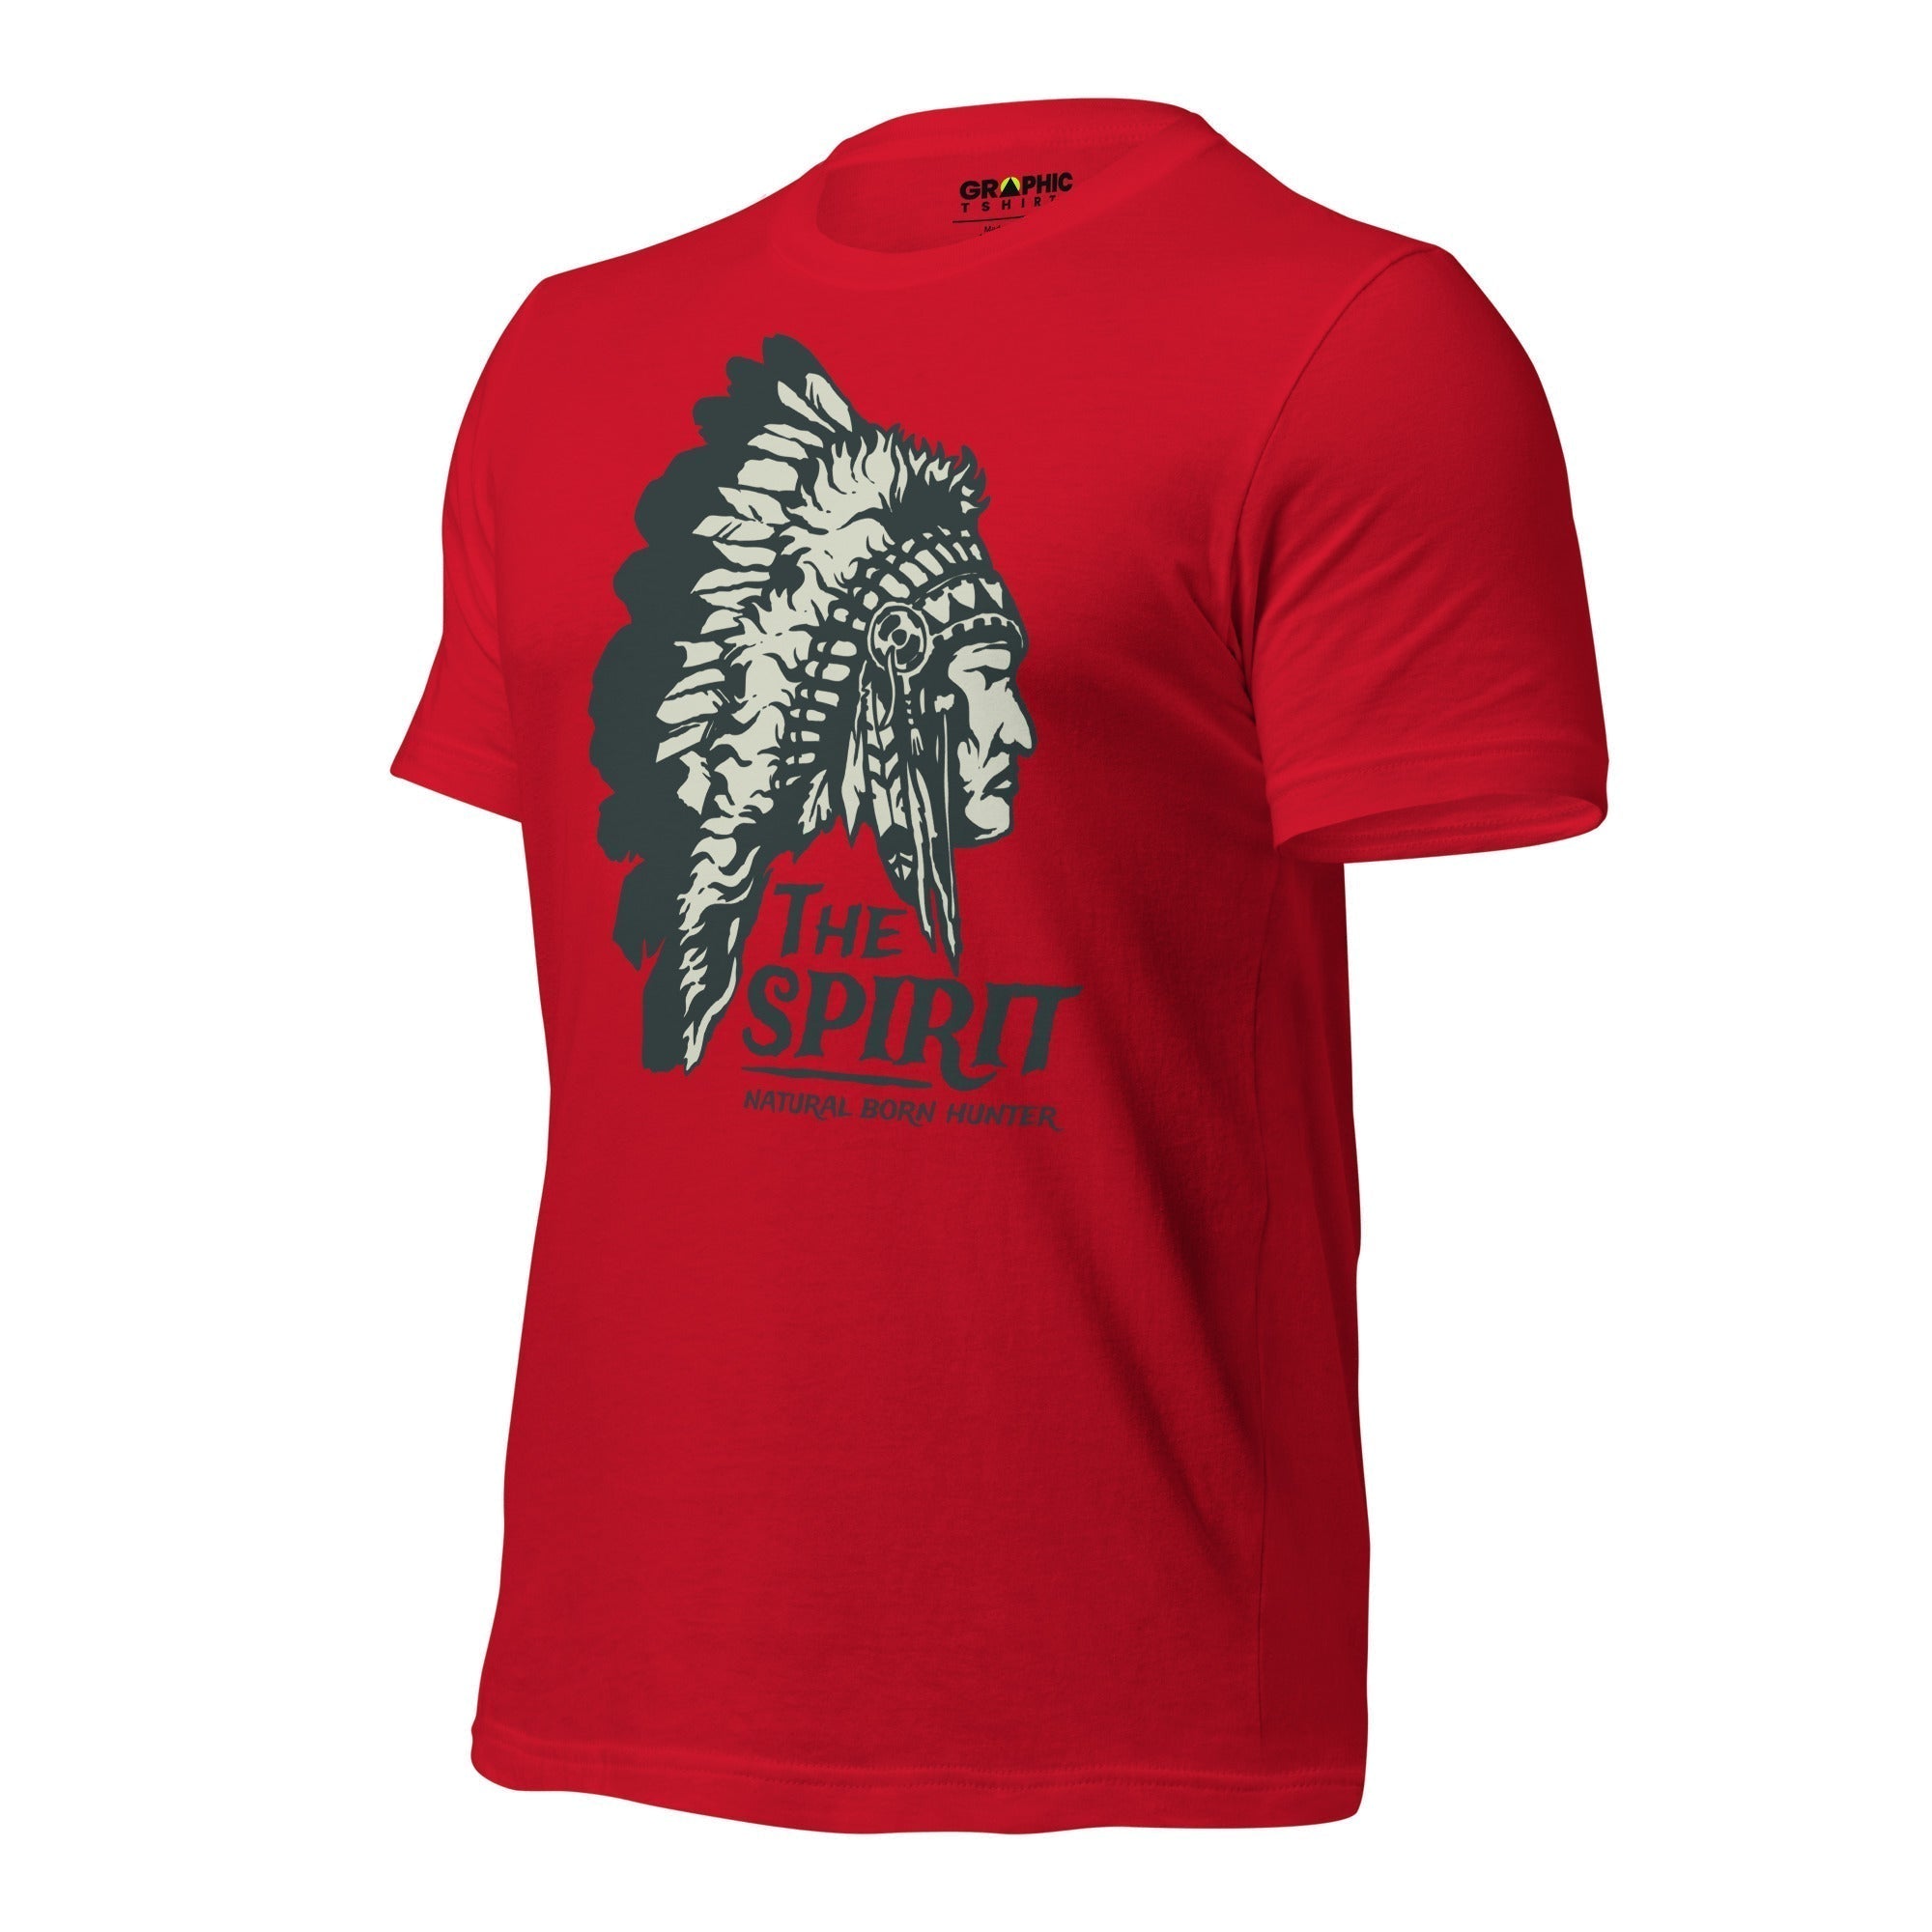 Men's Staple T-Shirt - The Spirit Natural Born Hunter - GRAPHIC T-SHIRTS